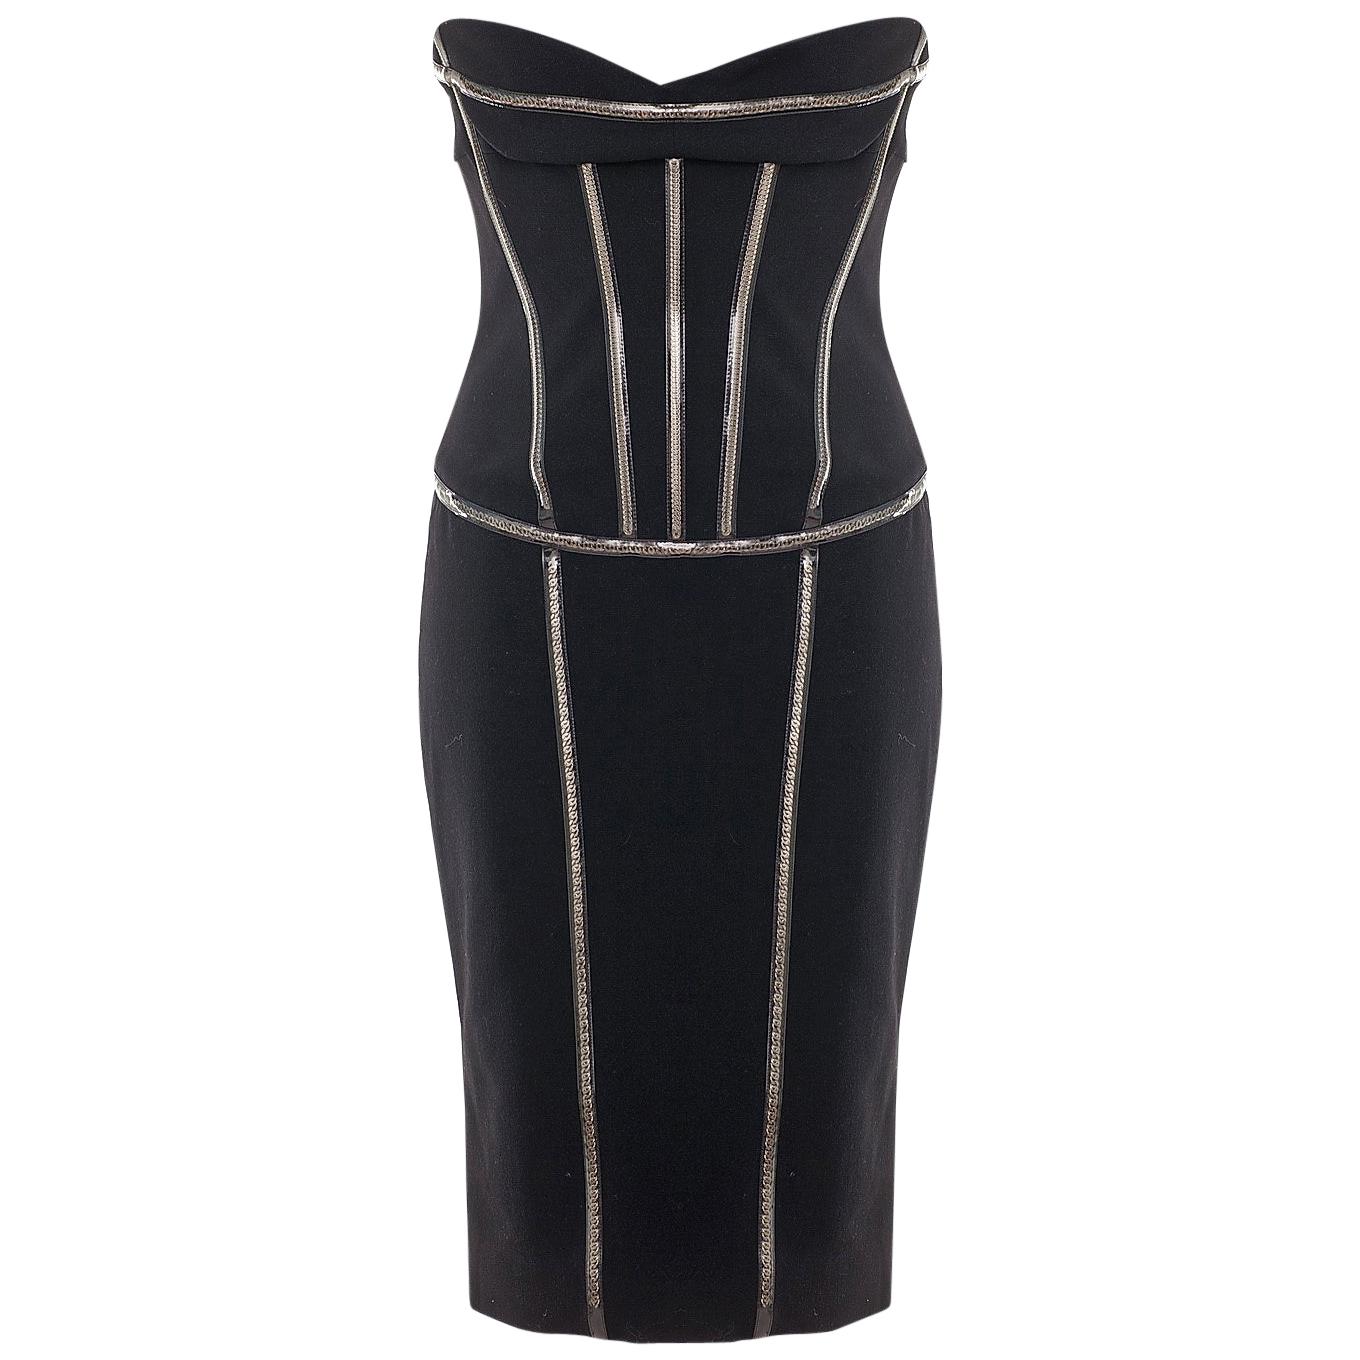 2007 Dolce & Gabbana Chain Embellished Black Corset Dress 42 - 6